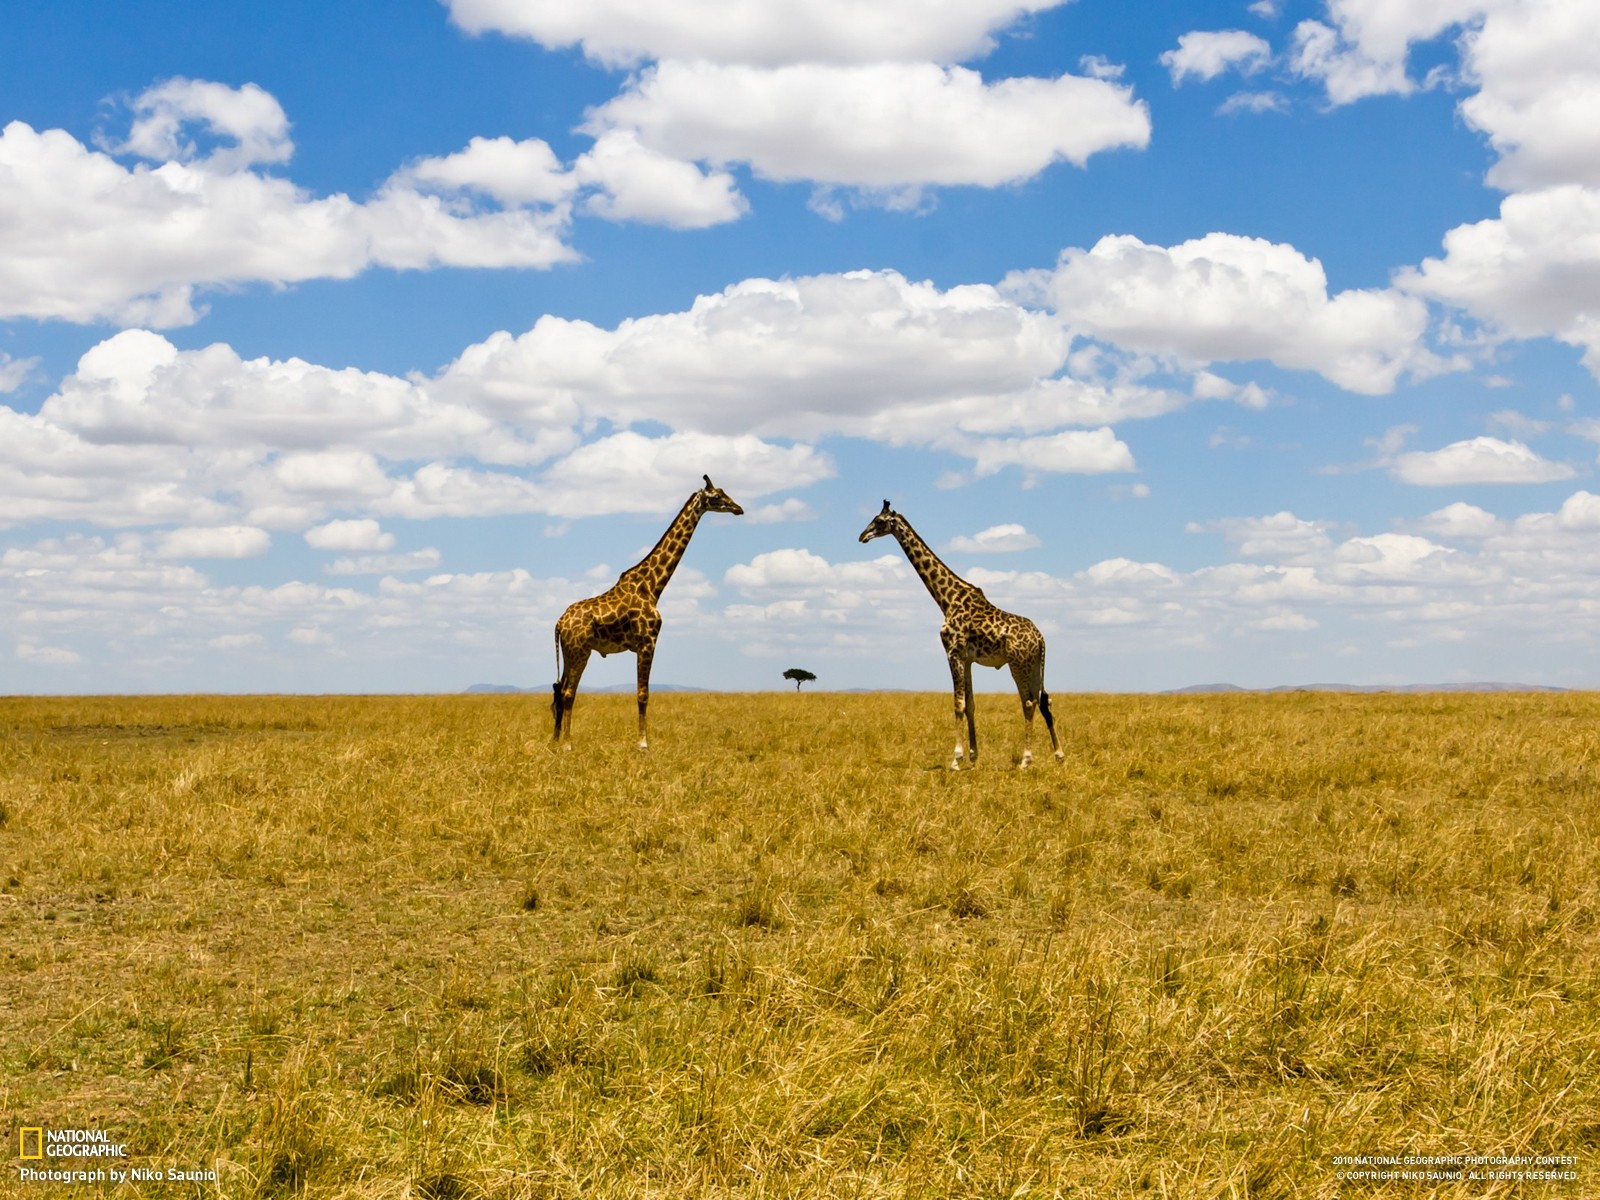 General 1600x1200 National Geographic landscape animals clouds giraffes mammals 2010 (Year)